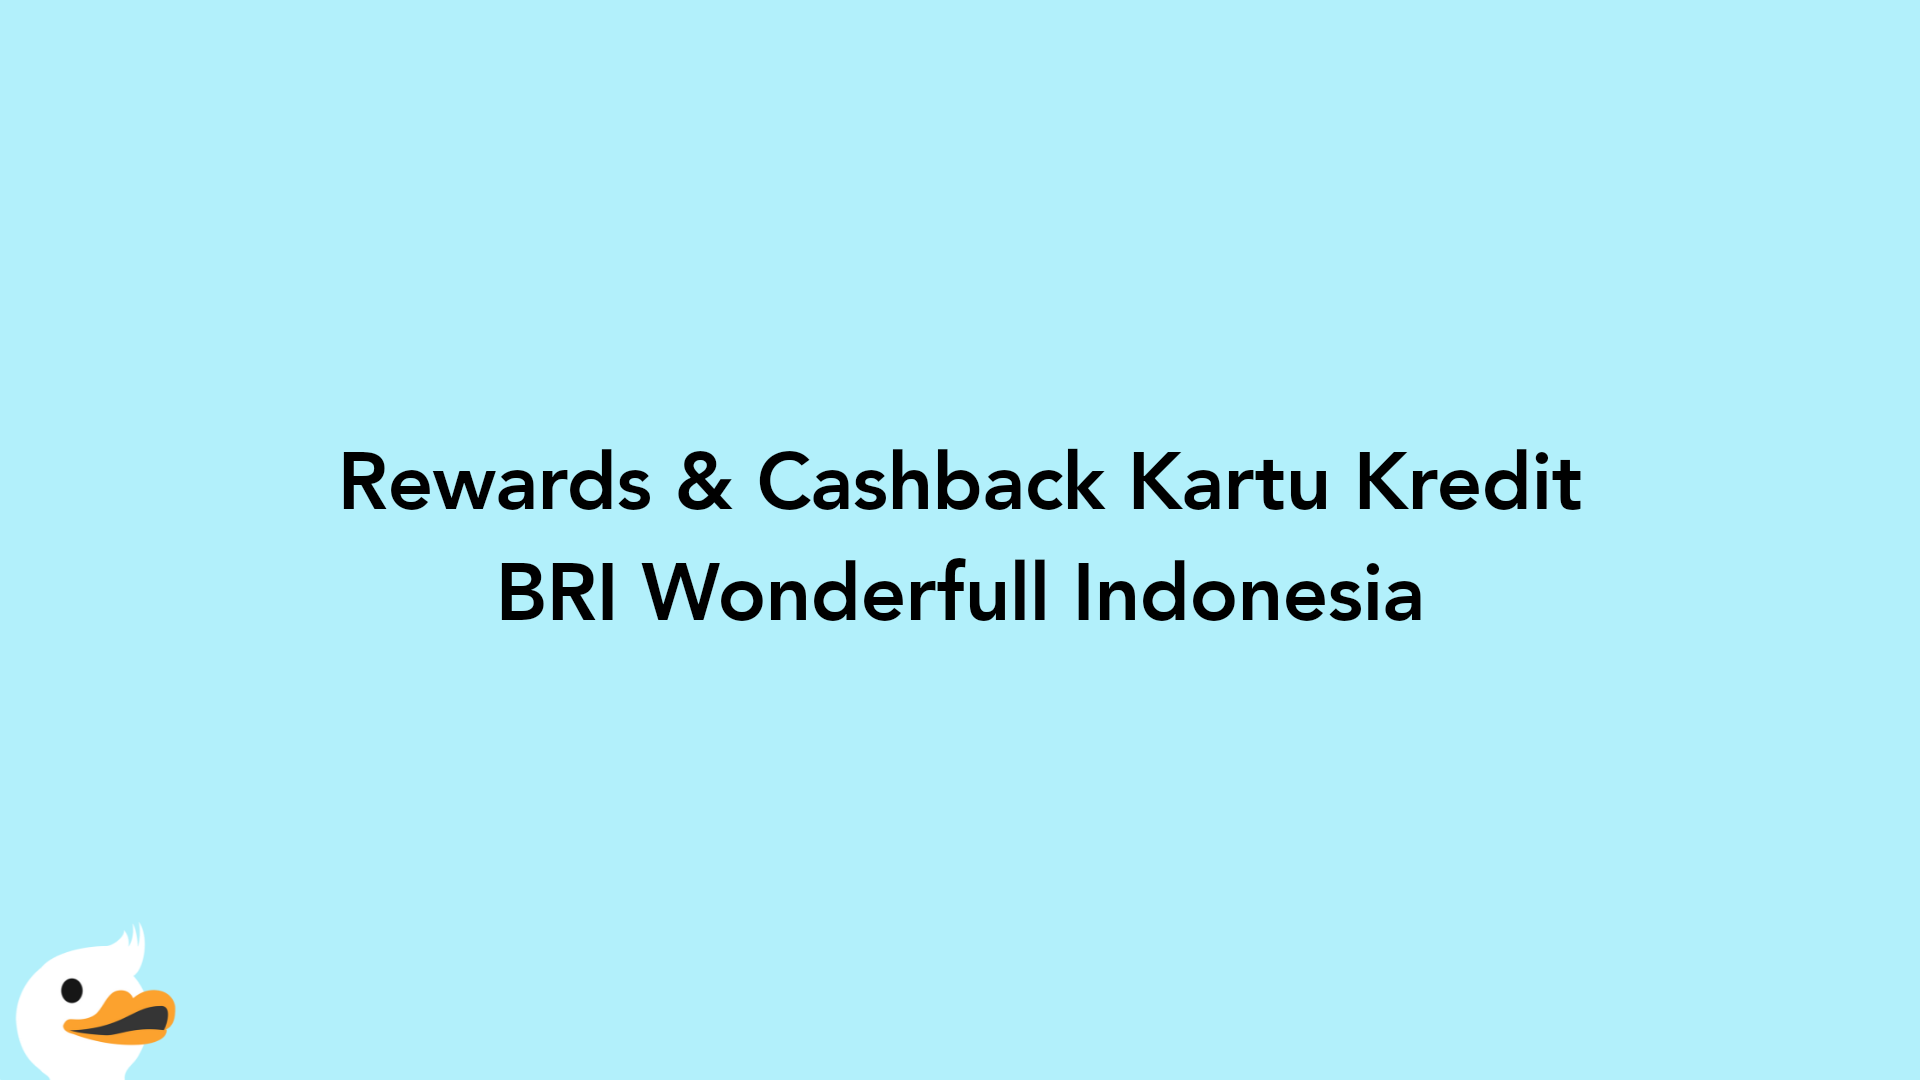 Rewards & Cashback Kartu Kredit BRI Wonderfull Indonesia